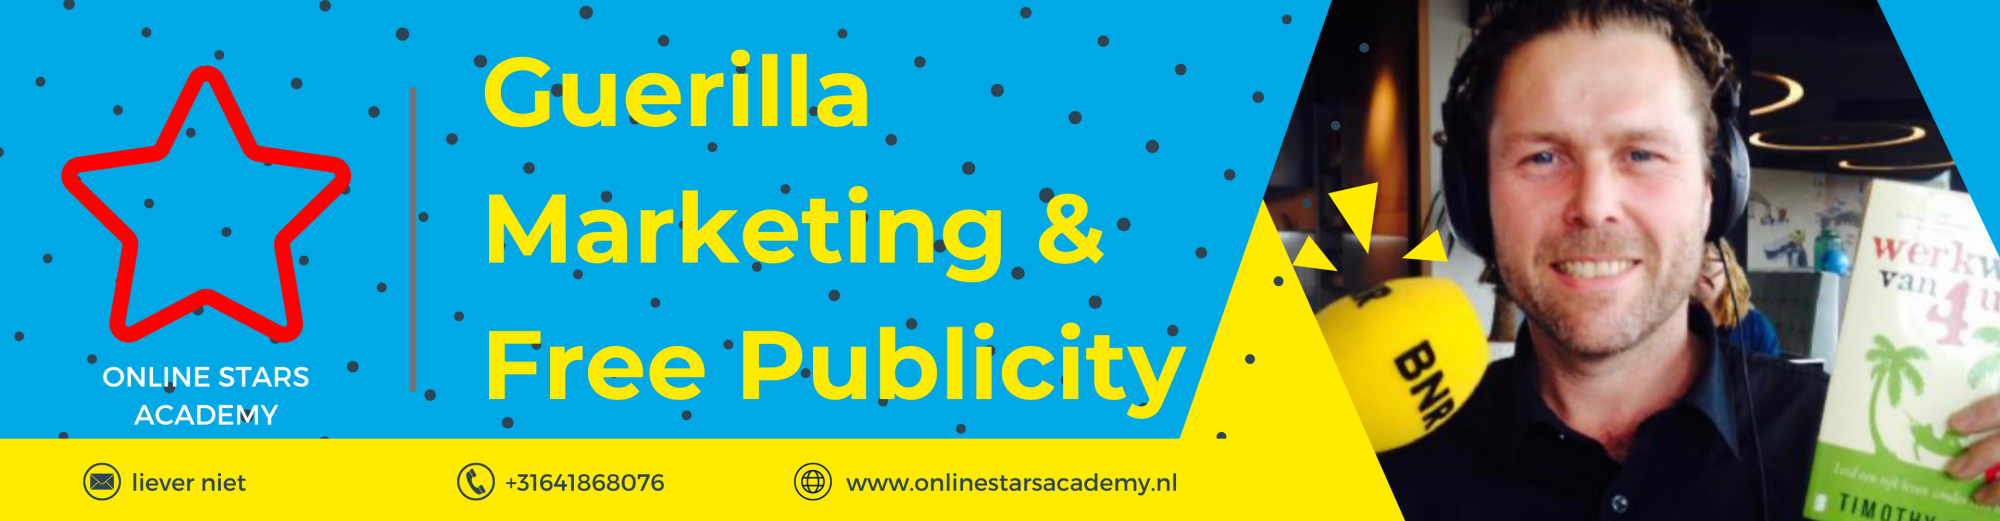 workshop-guerilla-marketing-free-publicity-1workshop-guerilla-marketing-free-publicity